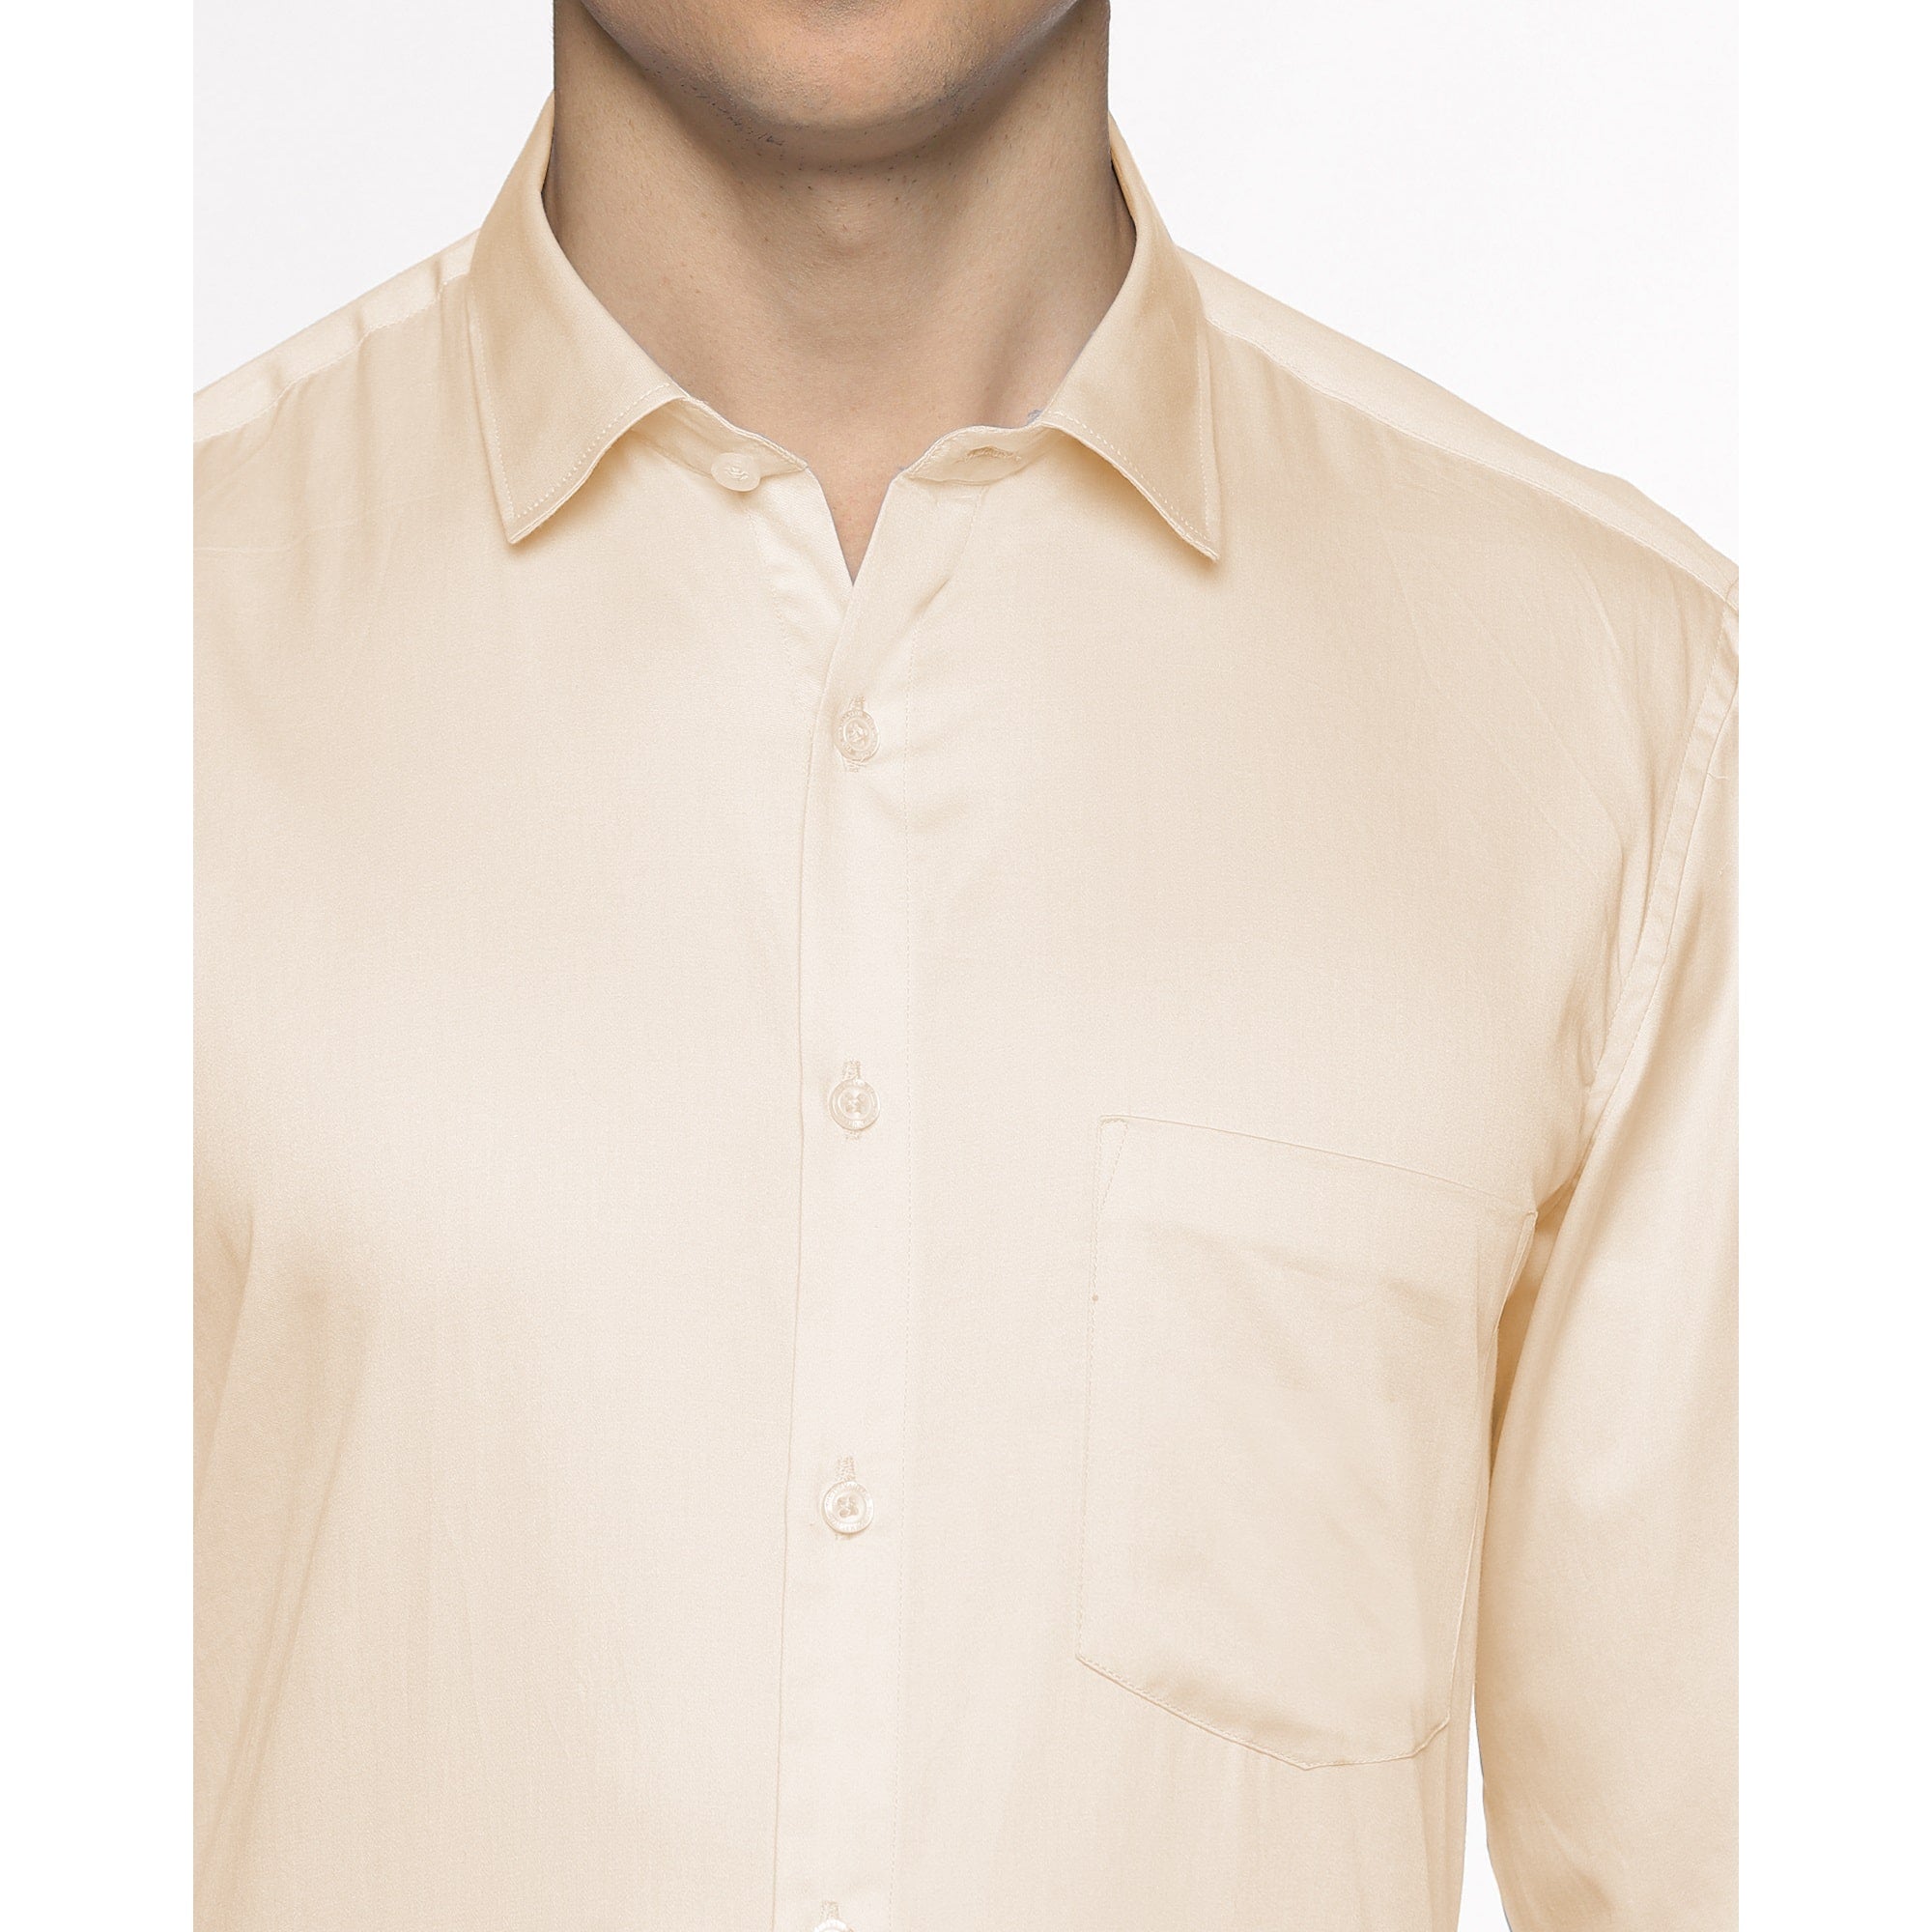 Swiss Finish Giza Cotton Shirt In Light Peach - The Formal Club